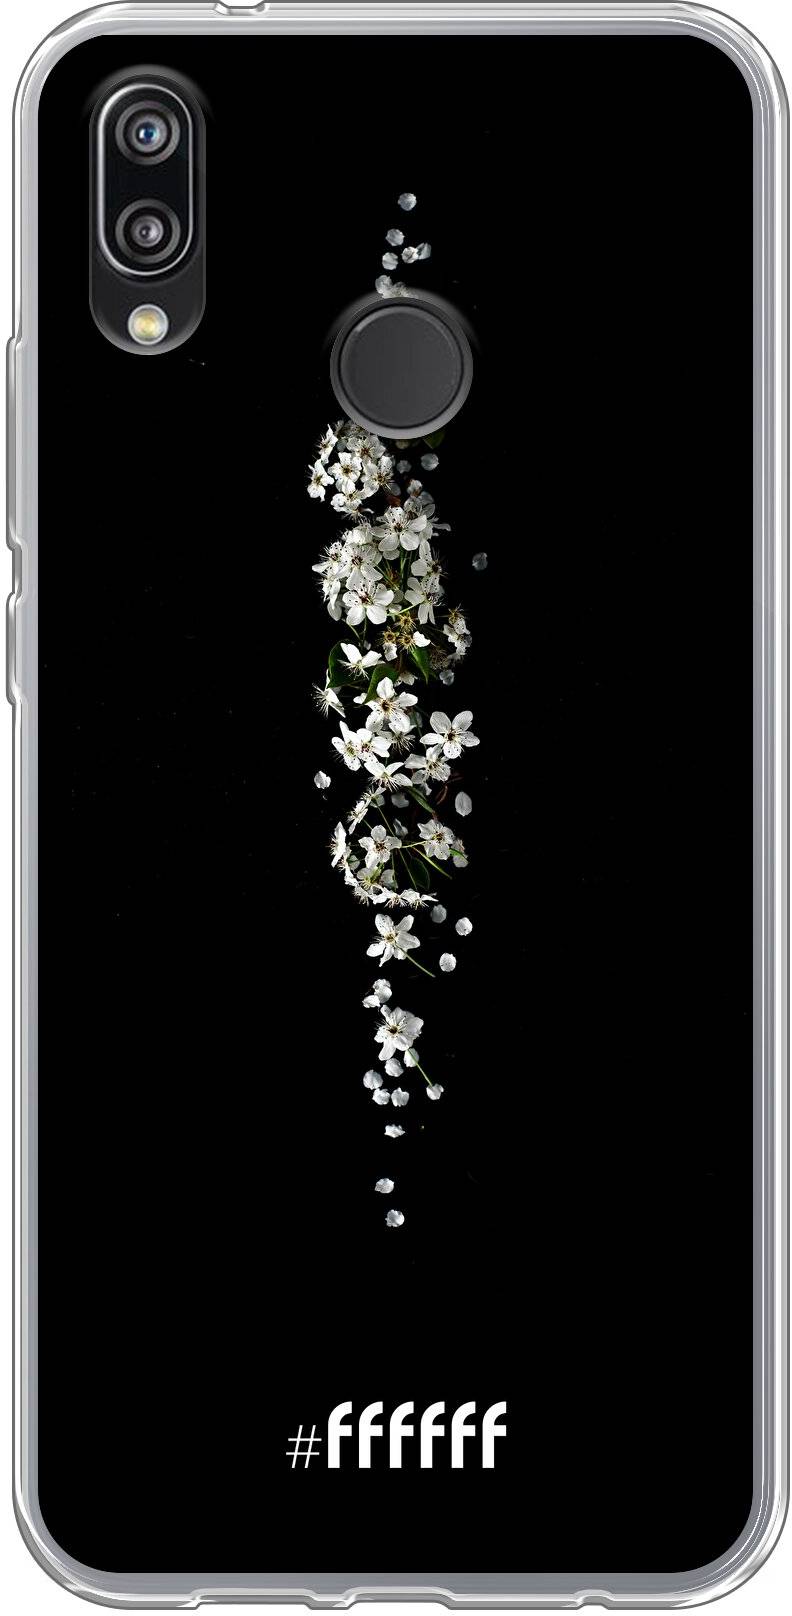 White flowers in the dark P20 Lite (2018)